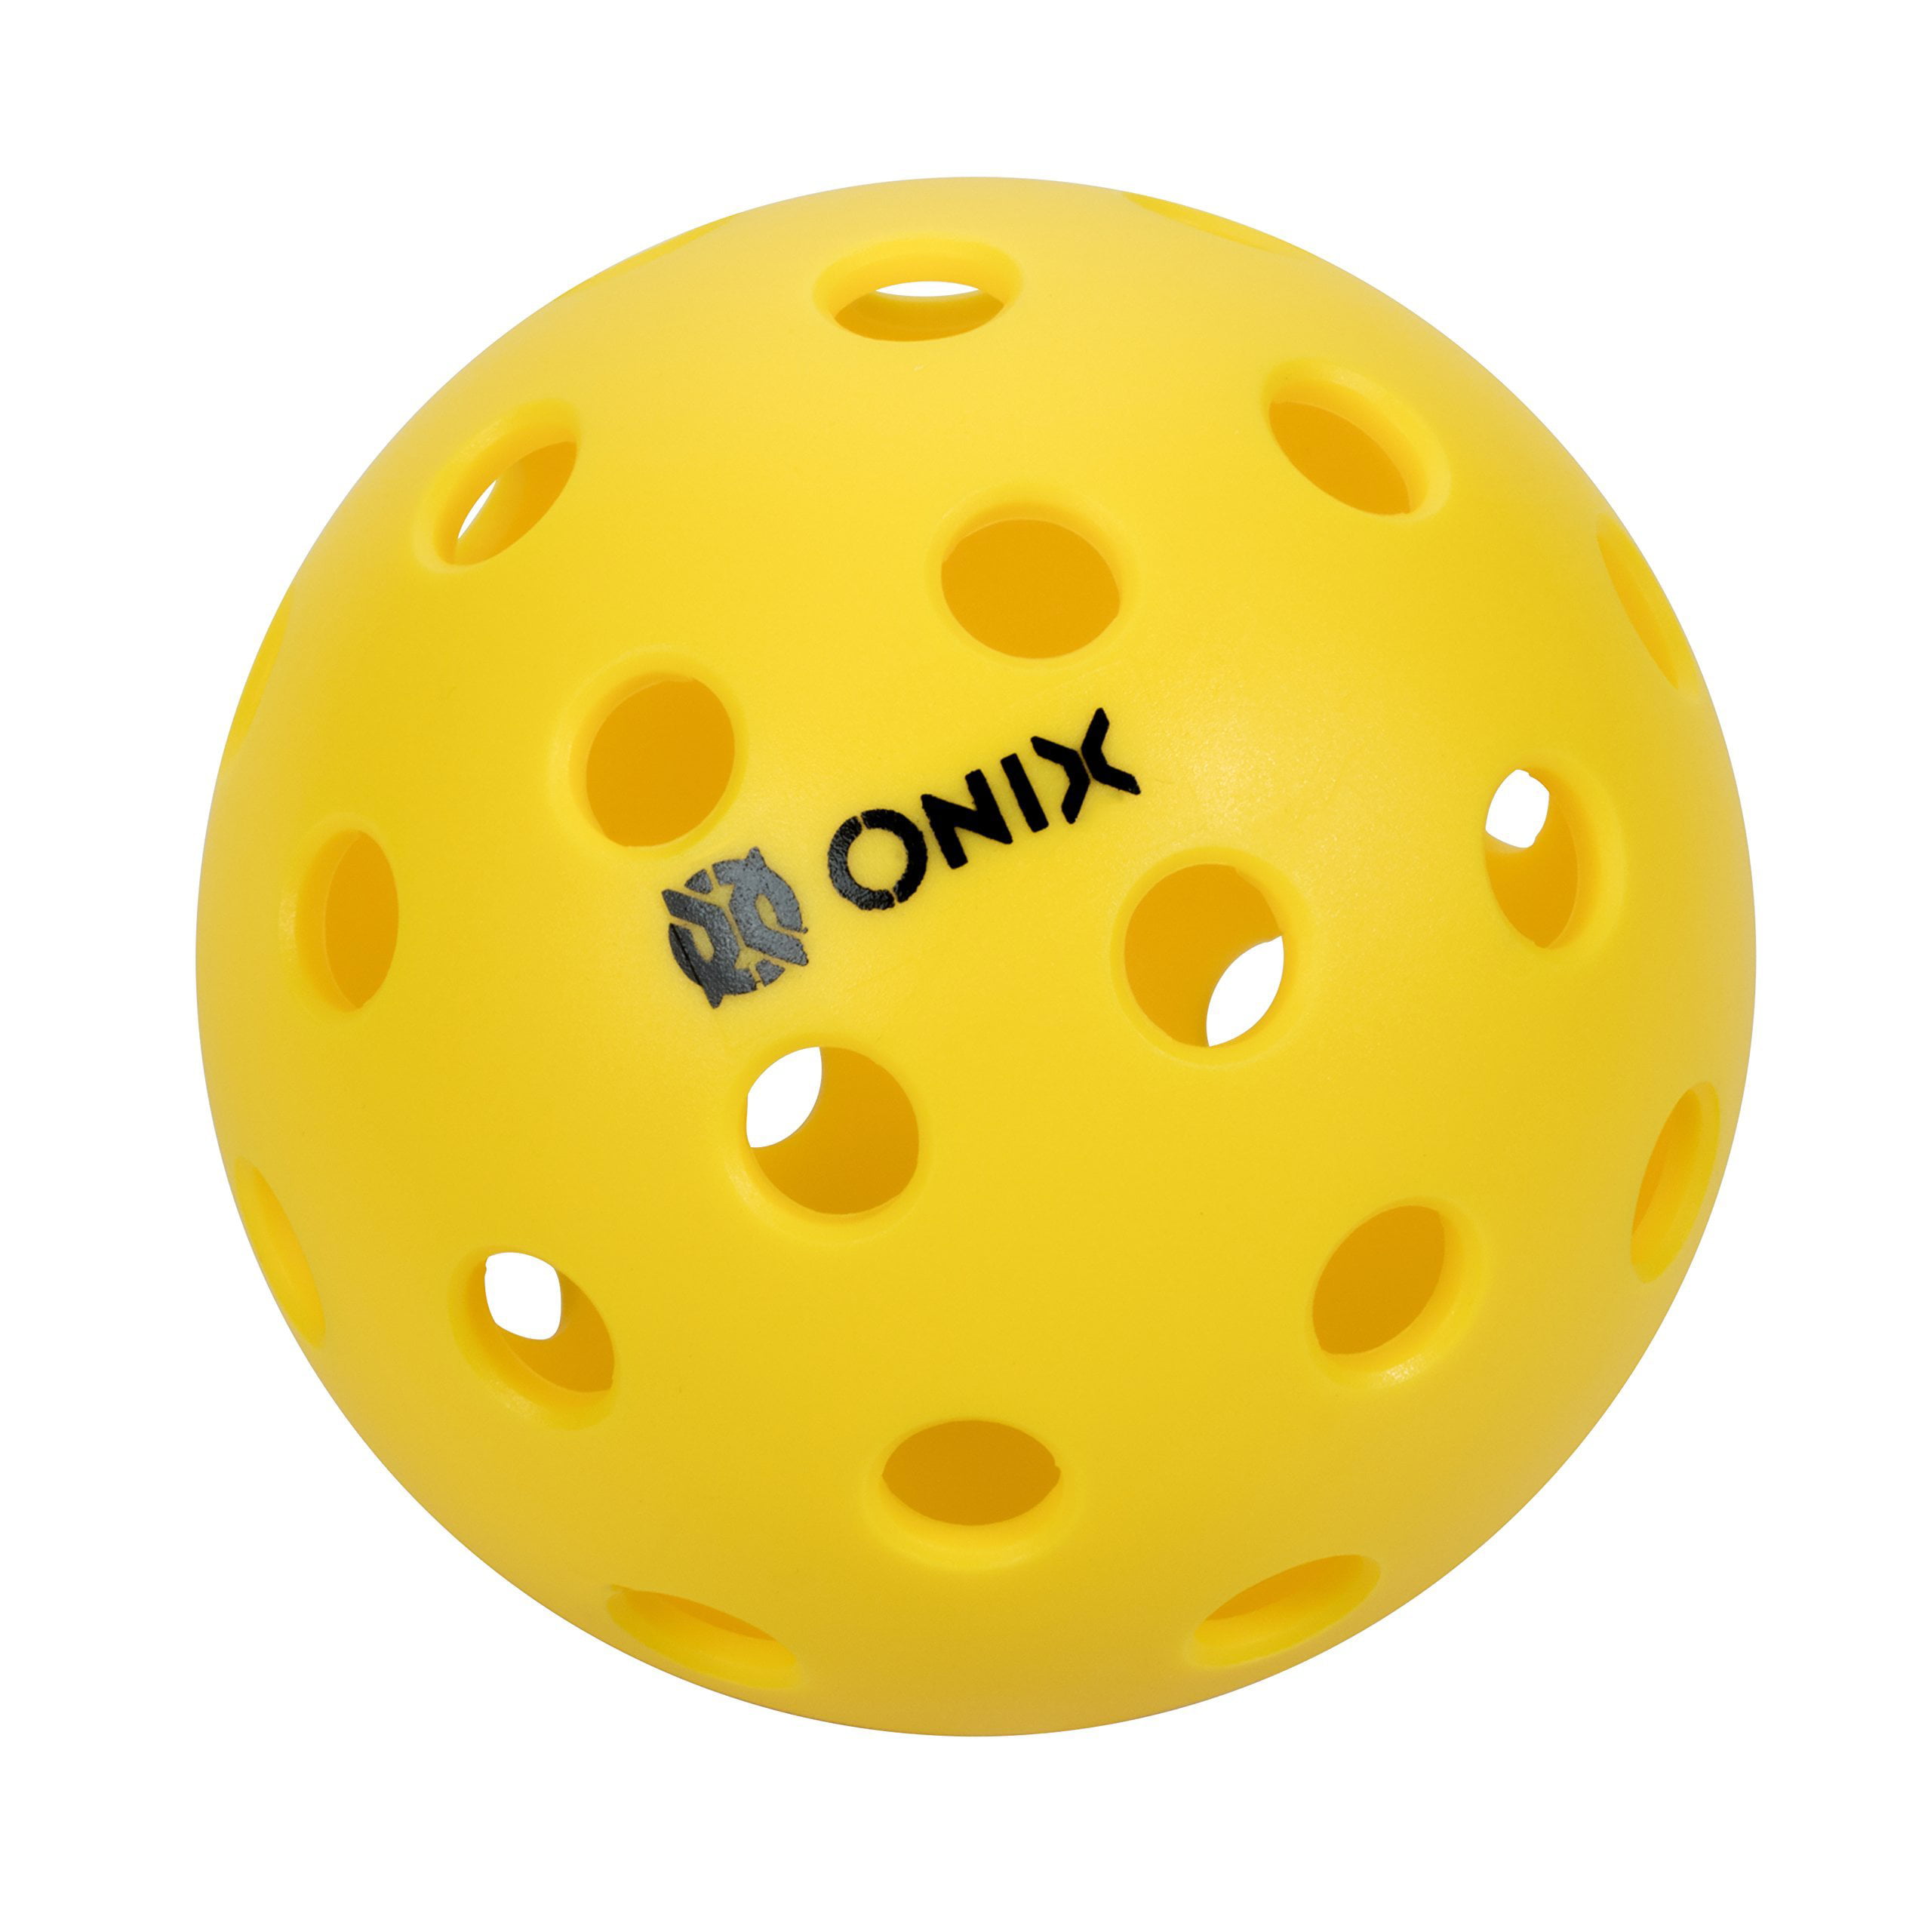 Onix Pure 2 Pickleball Balls Outdoor Pure2 Tournament Play Meets USAPA Set of 3 